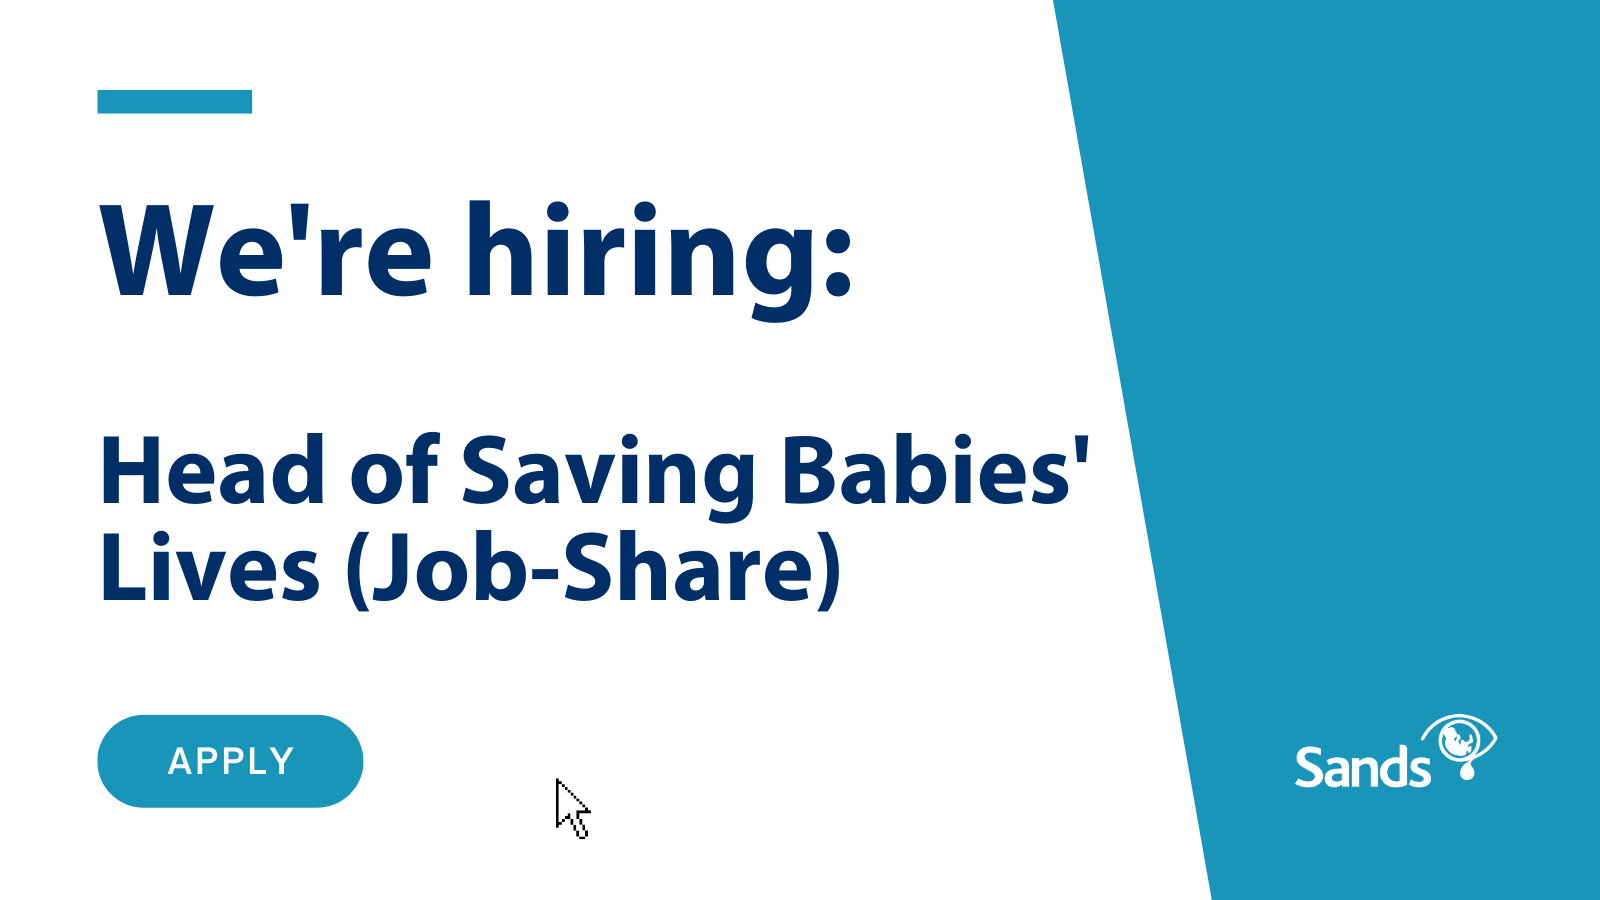 We are hiring Head of Saving Babies' Lives (Job-Share)